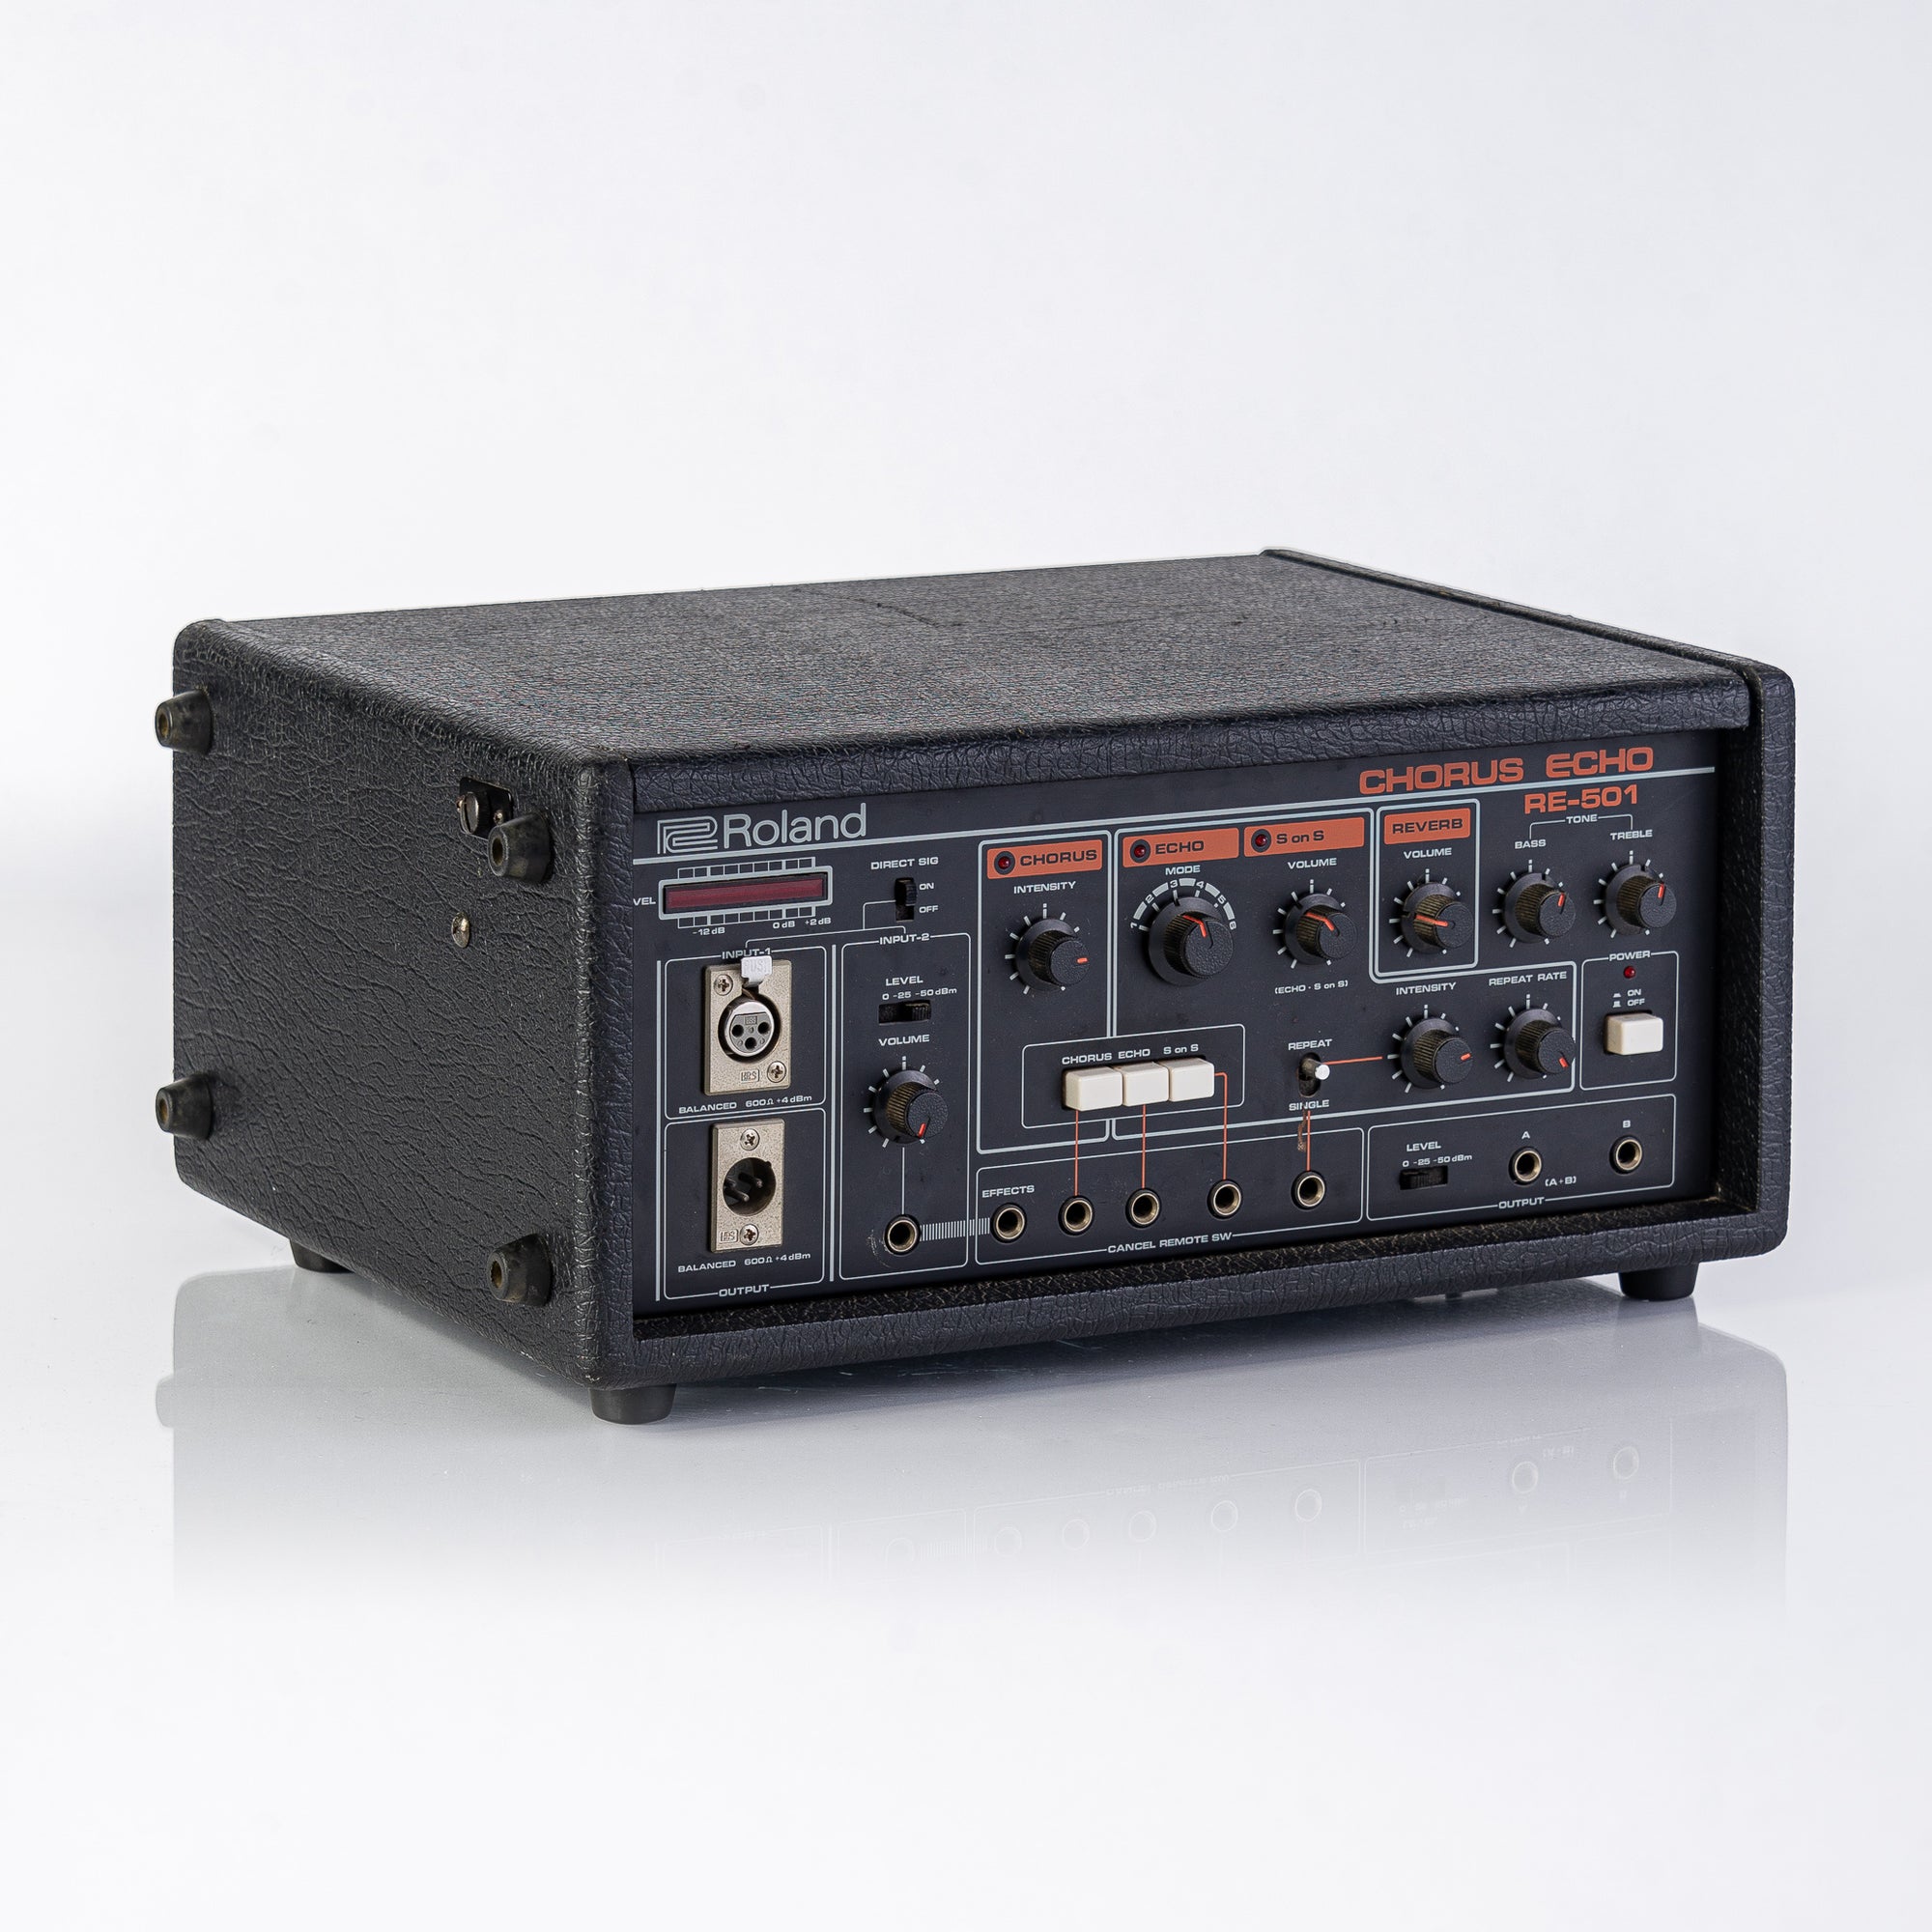 1982 Roland RE-501 Chorus Echo Effects Unit